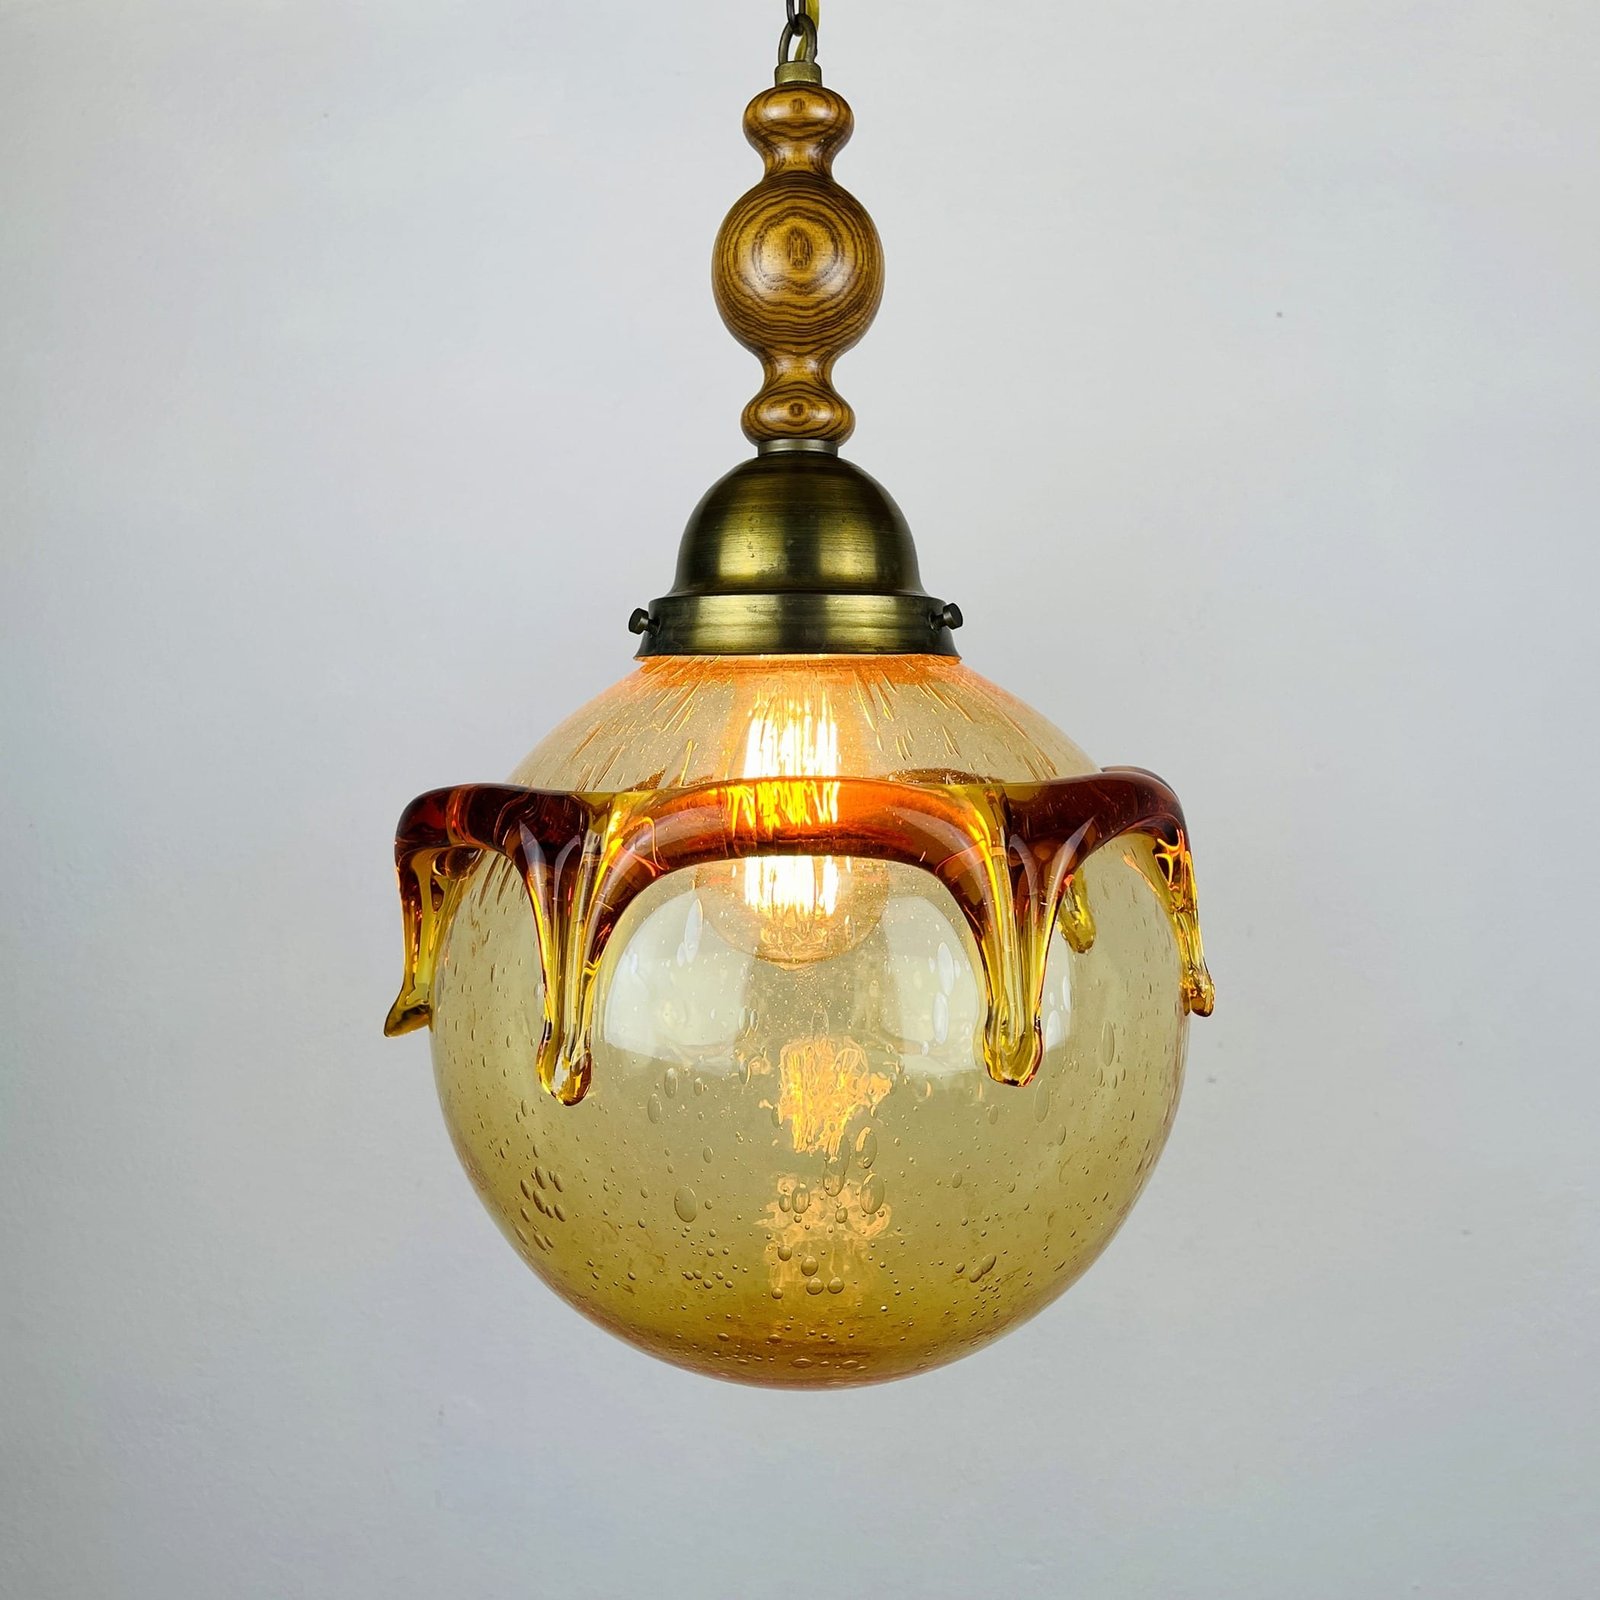 Vintage murano glass pendant lamp Italy 1960s beige and amber Retro home decor Mid-century light